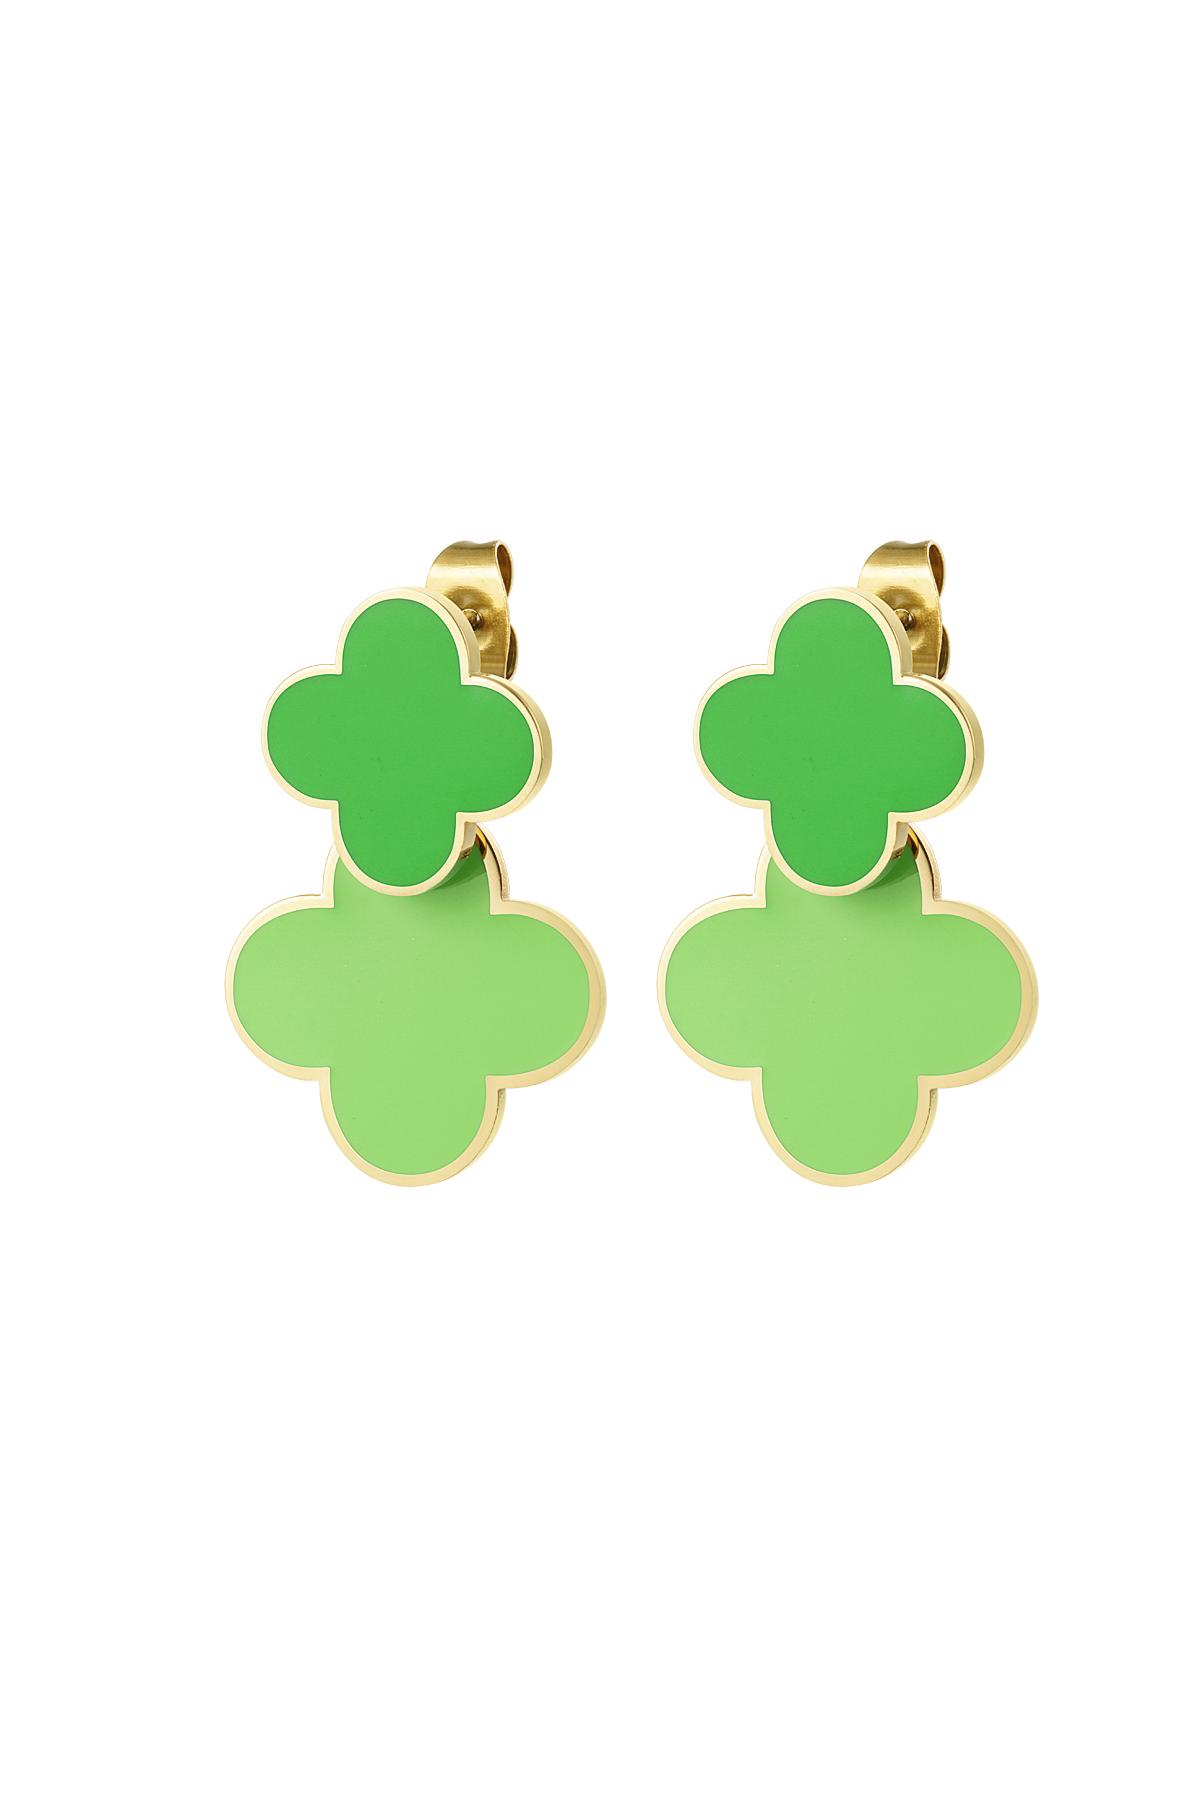 Earrings 2 clovers Green &amp; Gold Stainless Steel